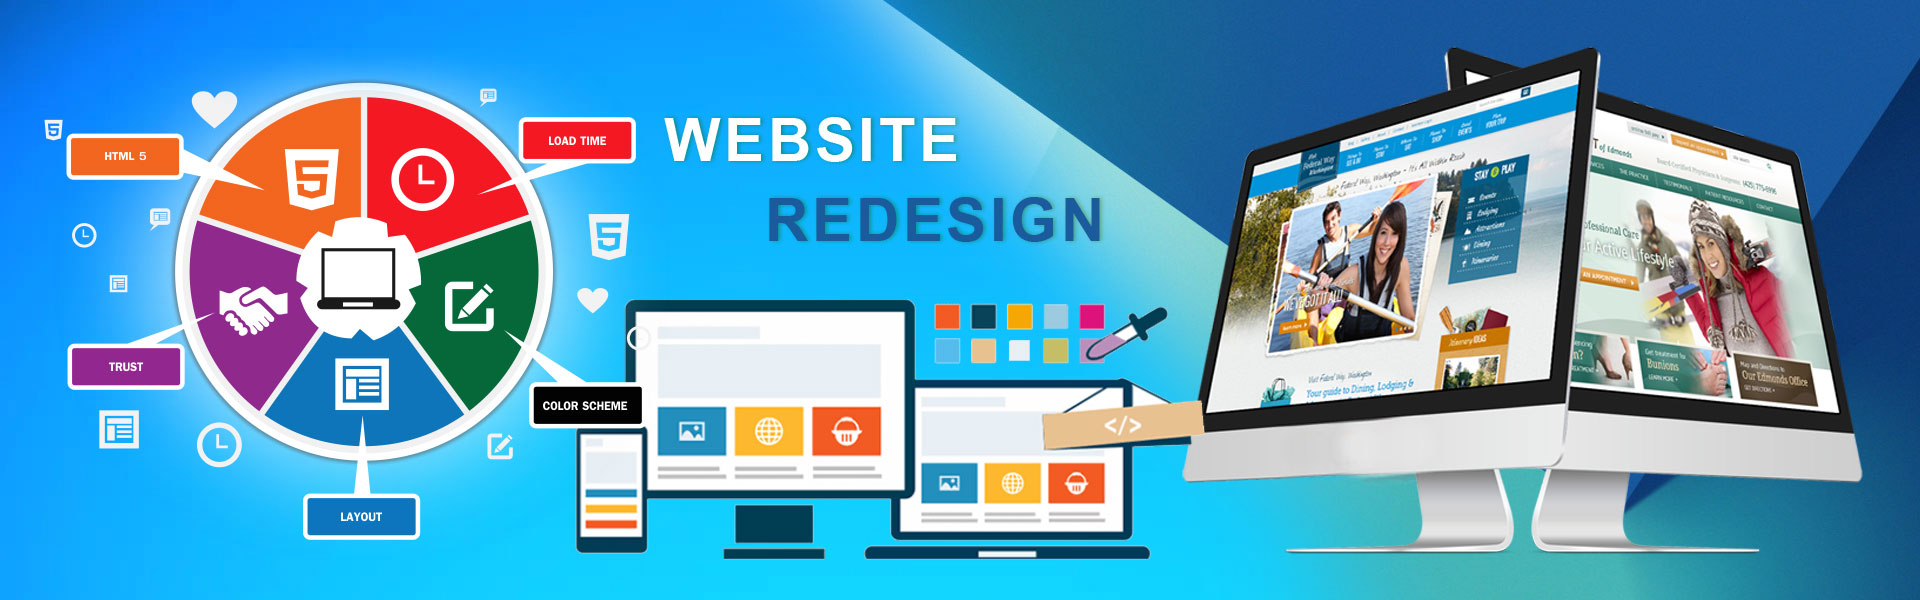 web-redesigning-banner